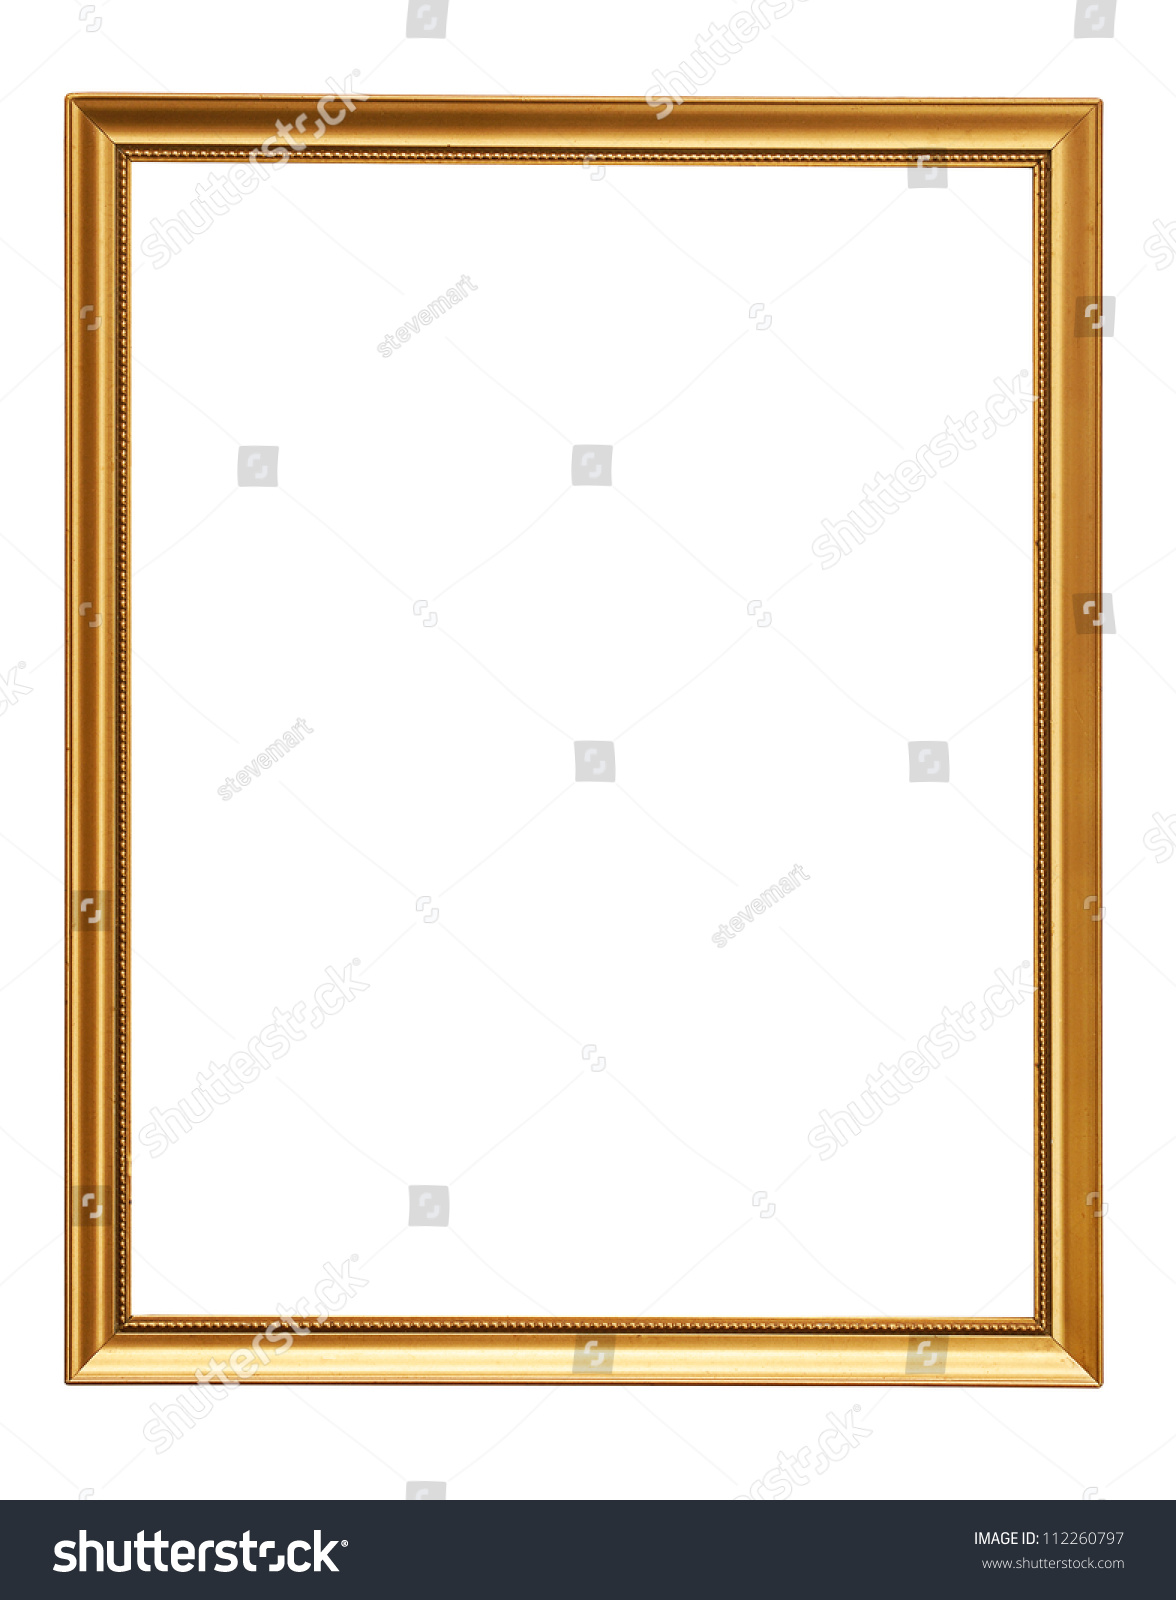 Gold vintage frame. Elegant vintage gold/gilded picture frame with beading. Isolated on white. #112260797